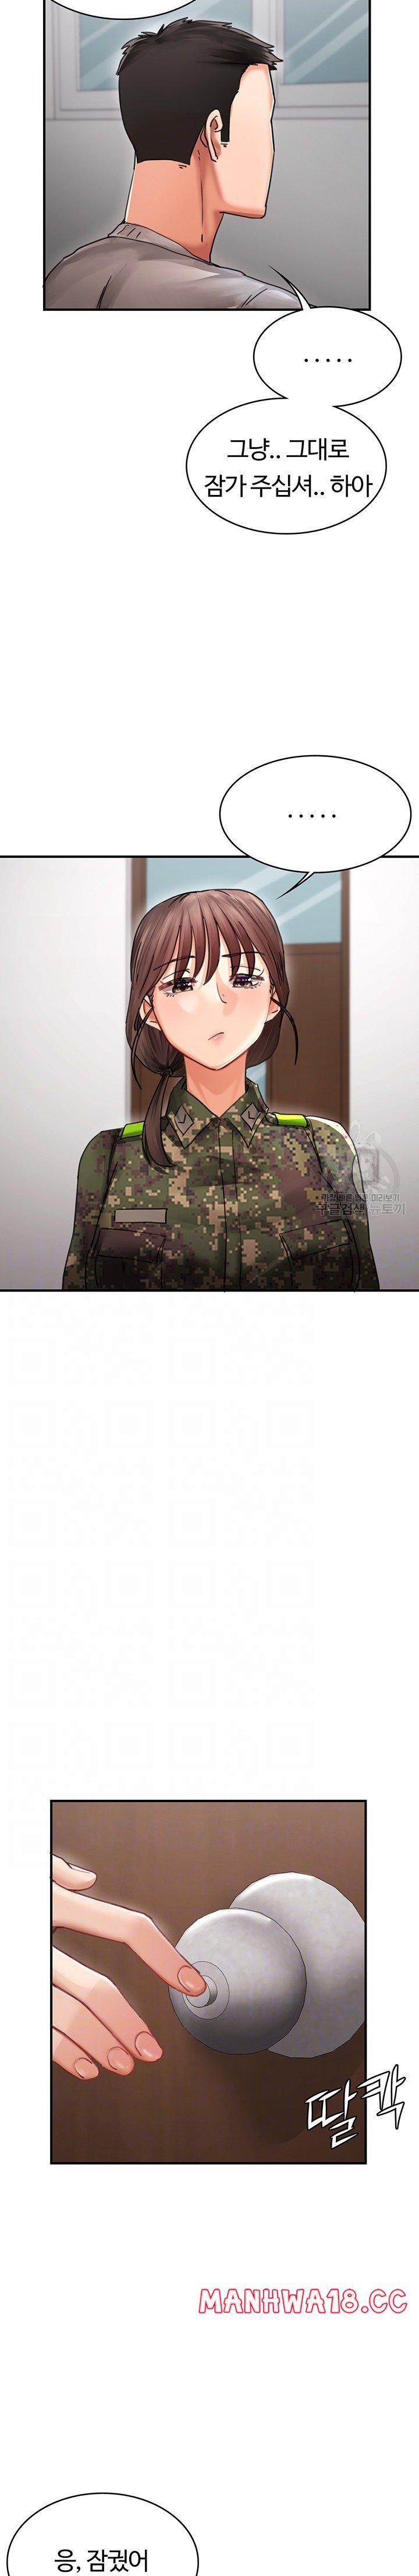 the-battalion-commanders-daughter-raw-chap-37-6